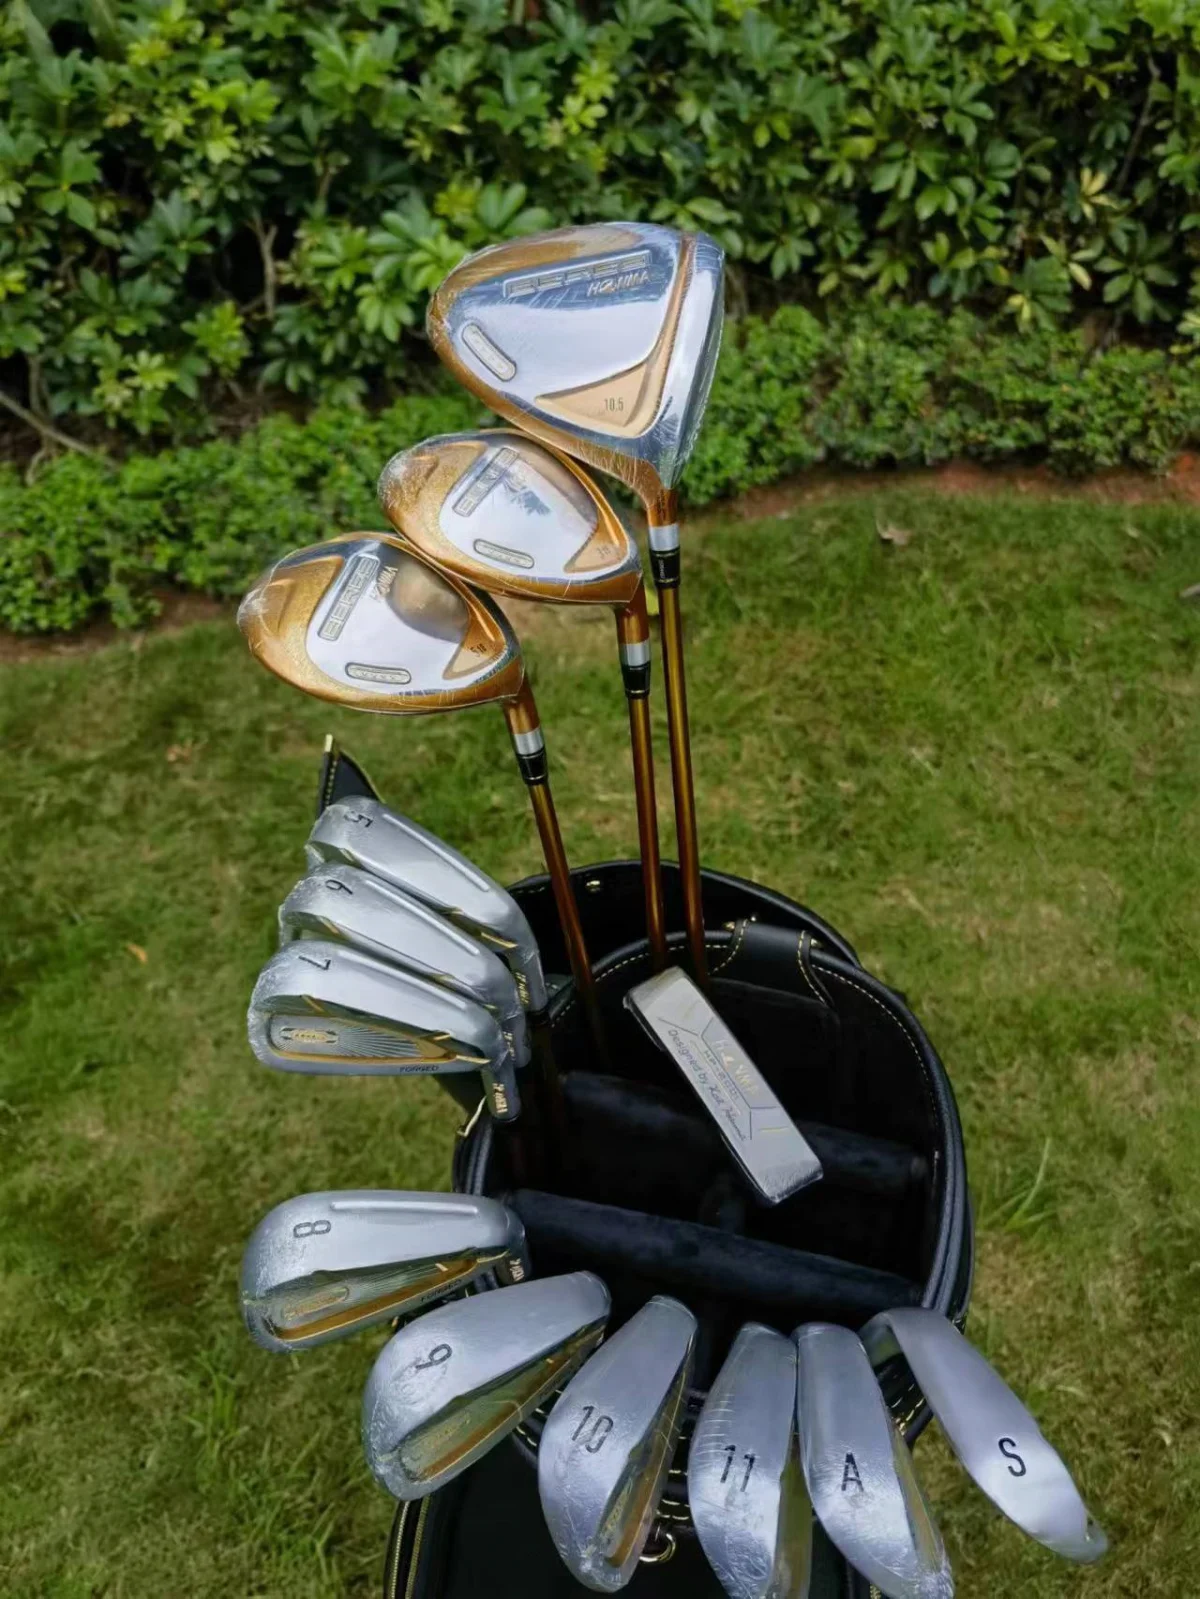 

Golf Clubs New Honma Beres S07 4 stars Complete Set Golf Full Set Driver Fairway Woods Irons Putter Graphite Shaft No bag